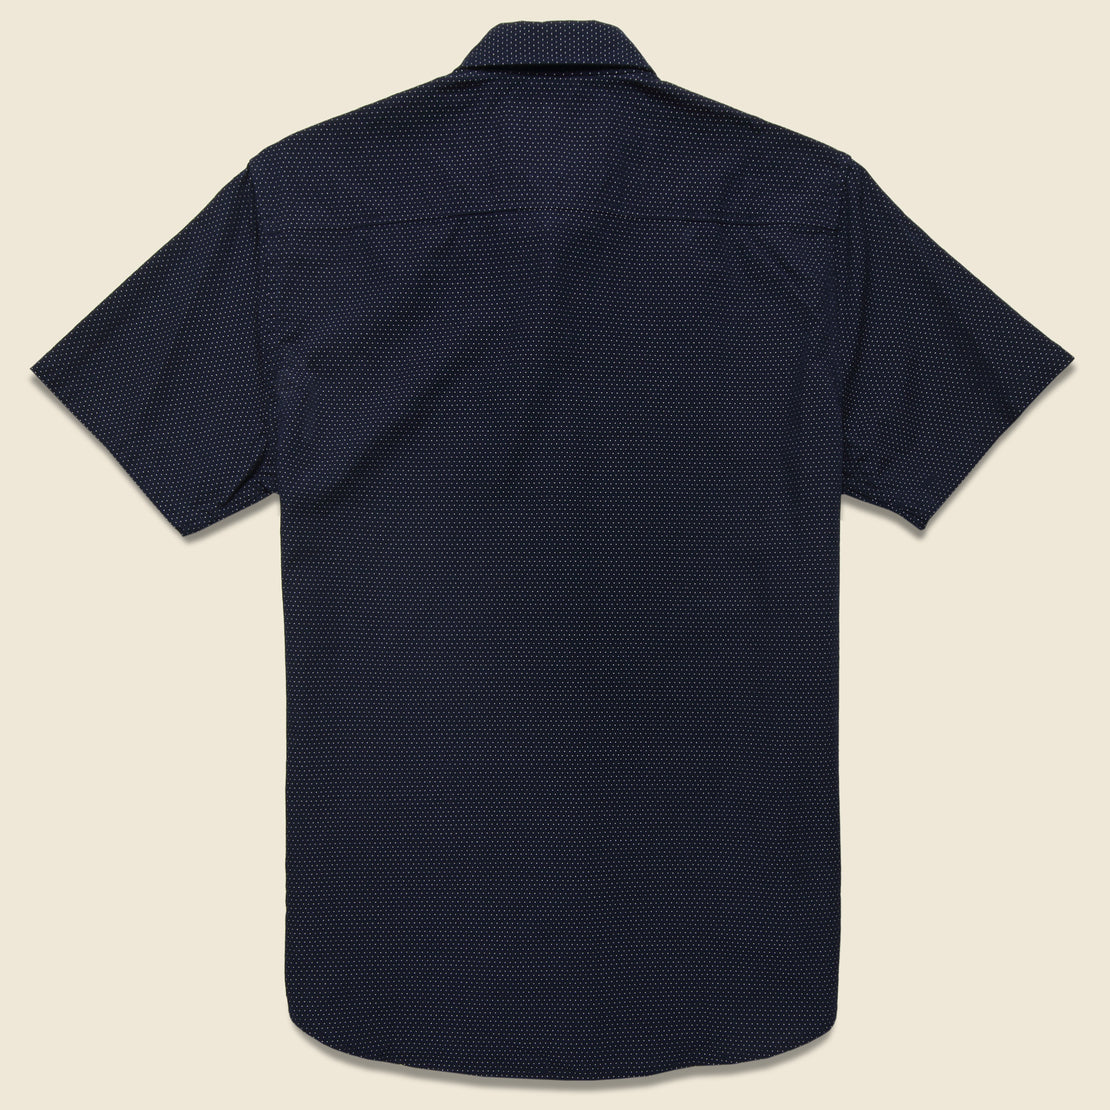 Lemoore Dot Shirt - Navy